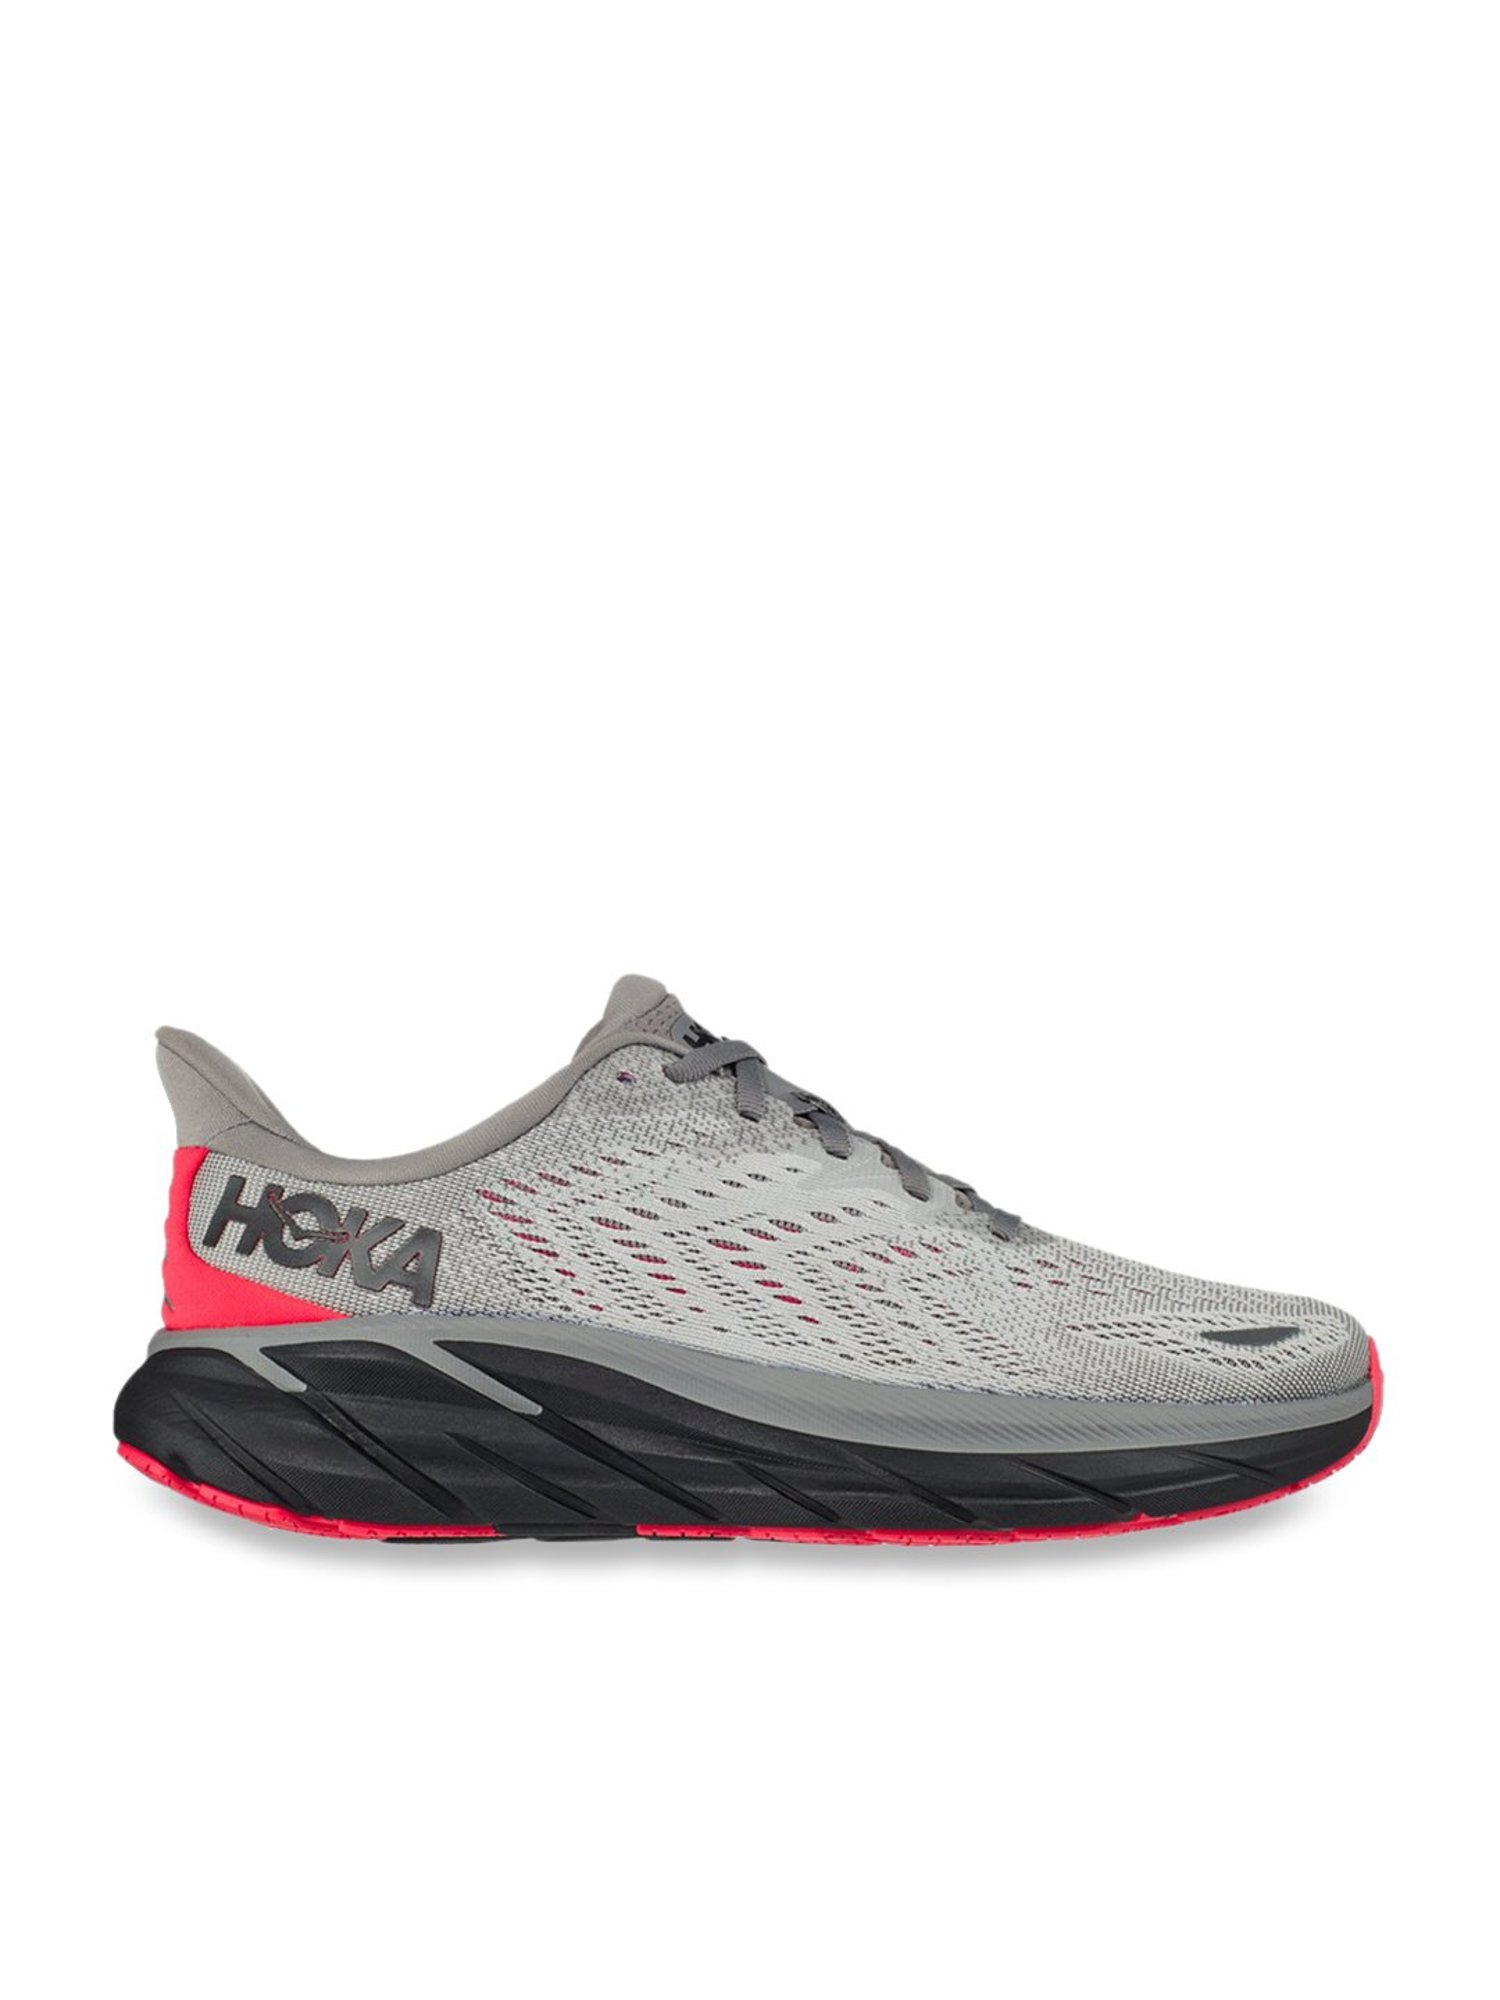 Hoka One One Clifton Running Shoes | SportsShoes.com